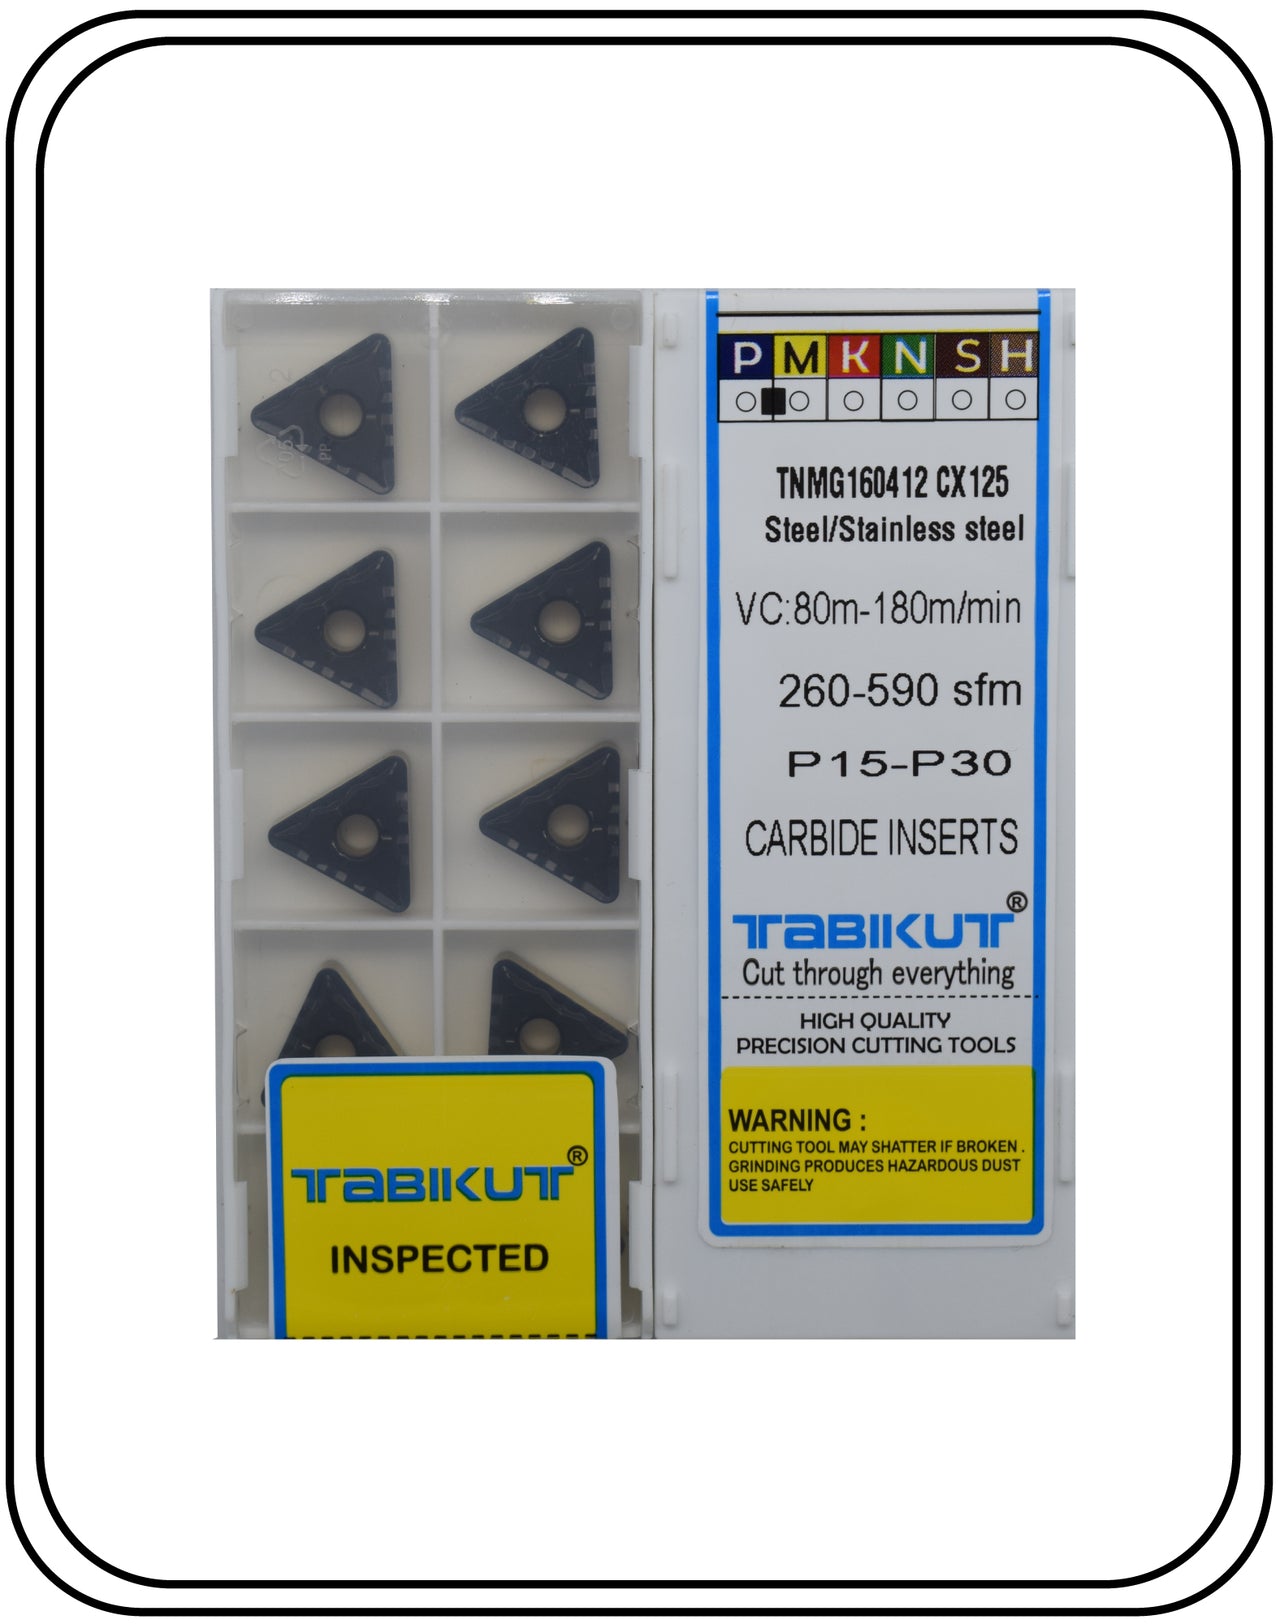 TNMG160404/08/12 cx125 For Steel & Stainless Steel Mild Steel Pack Of 10